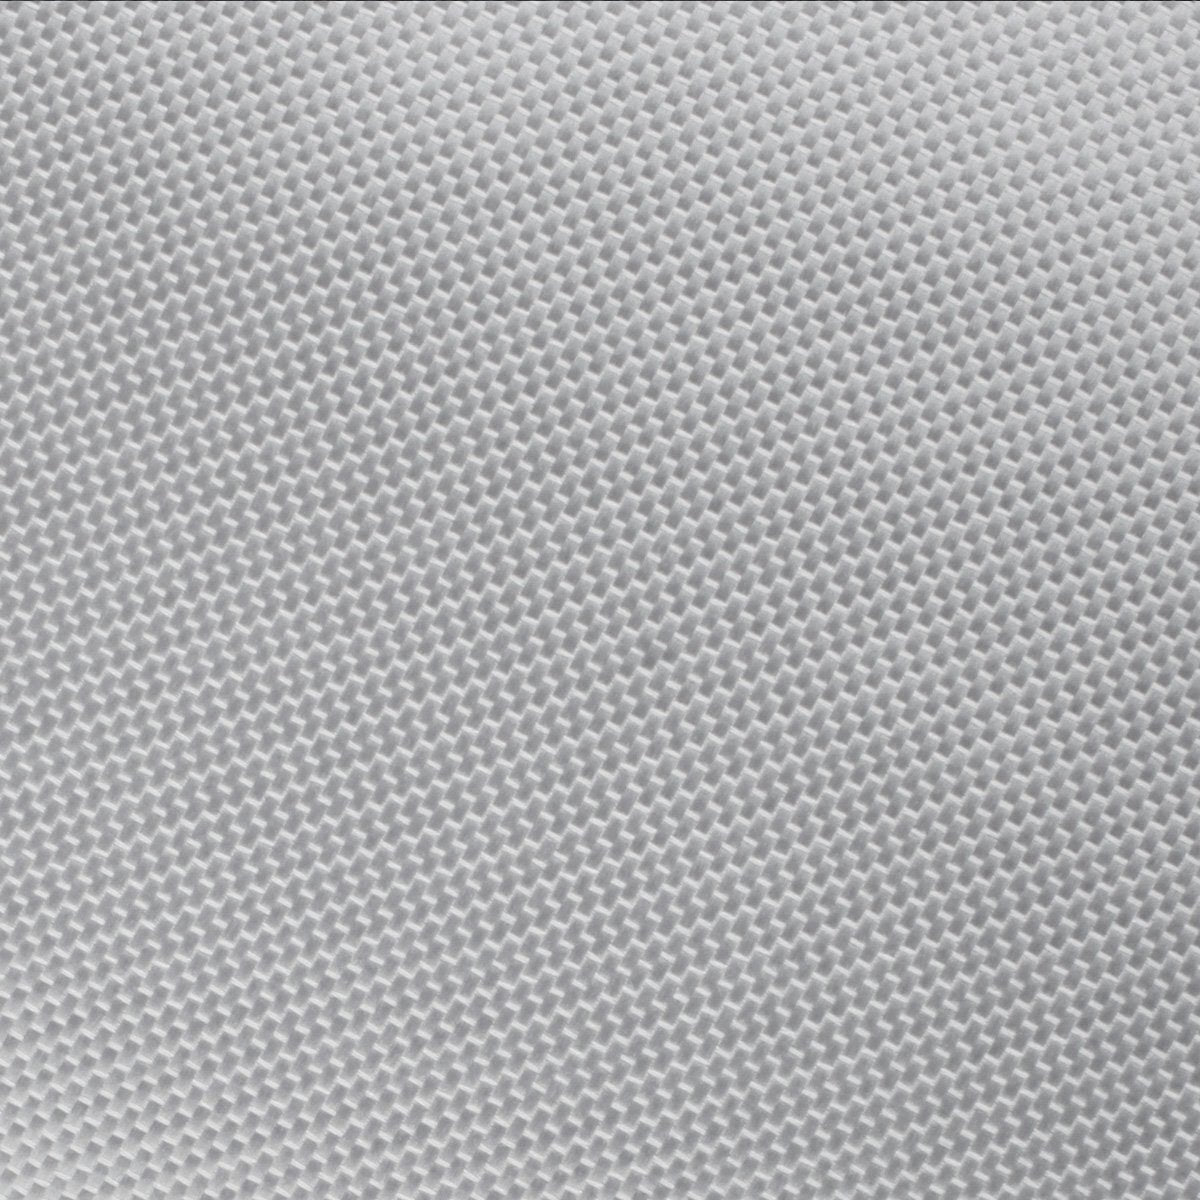 Rustic Light Gray Oxford Weave Skinny Tie Fabric